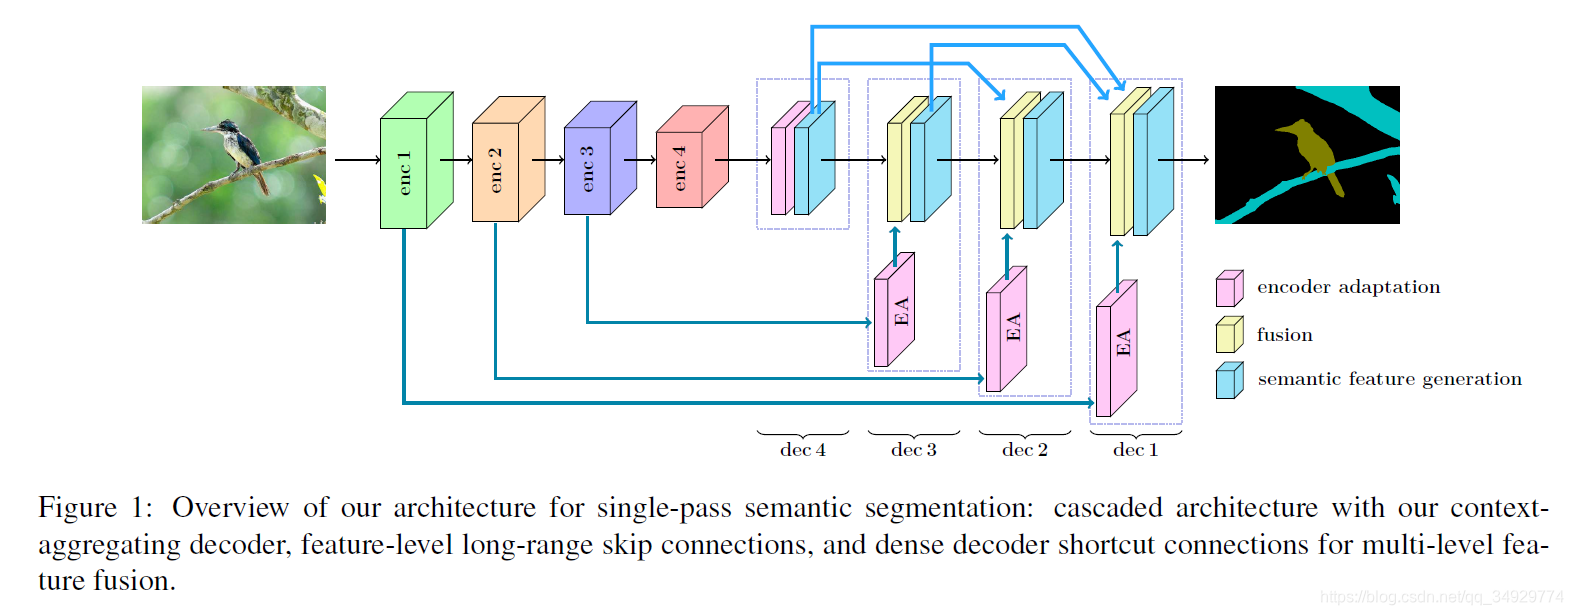 Dense Decoder Shortcut Connections for Single-Pass Semantic Segmentation